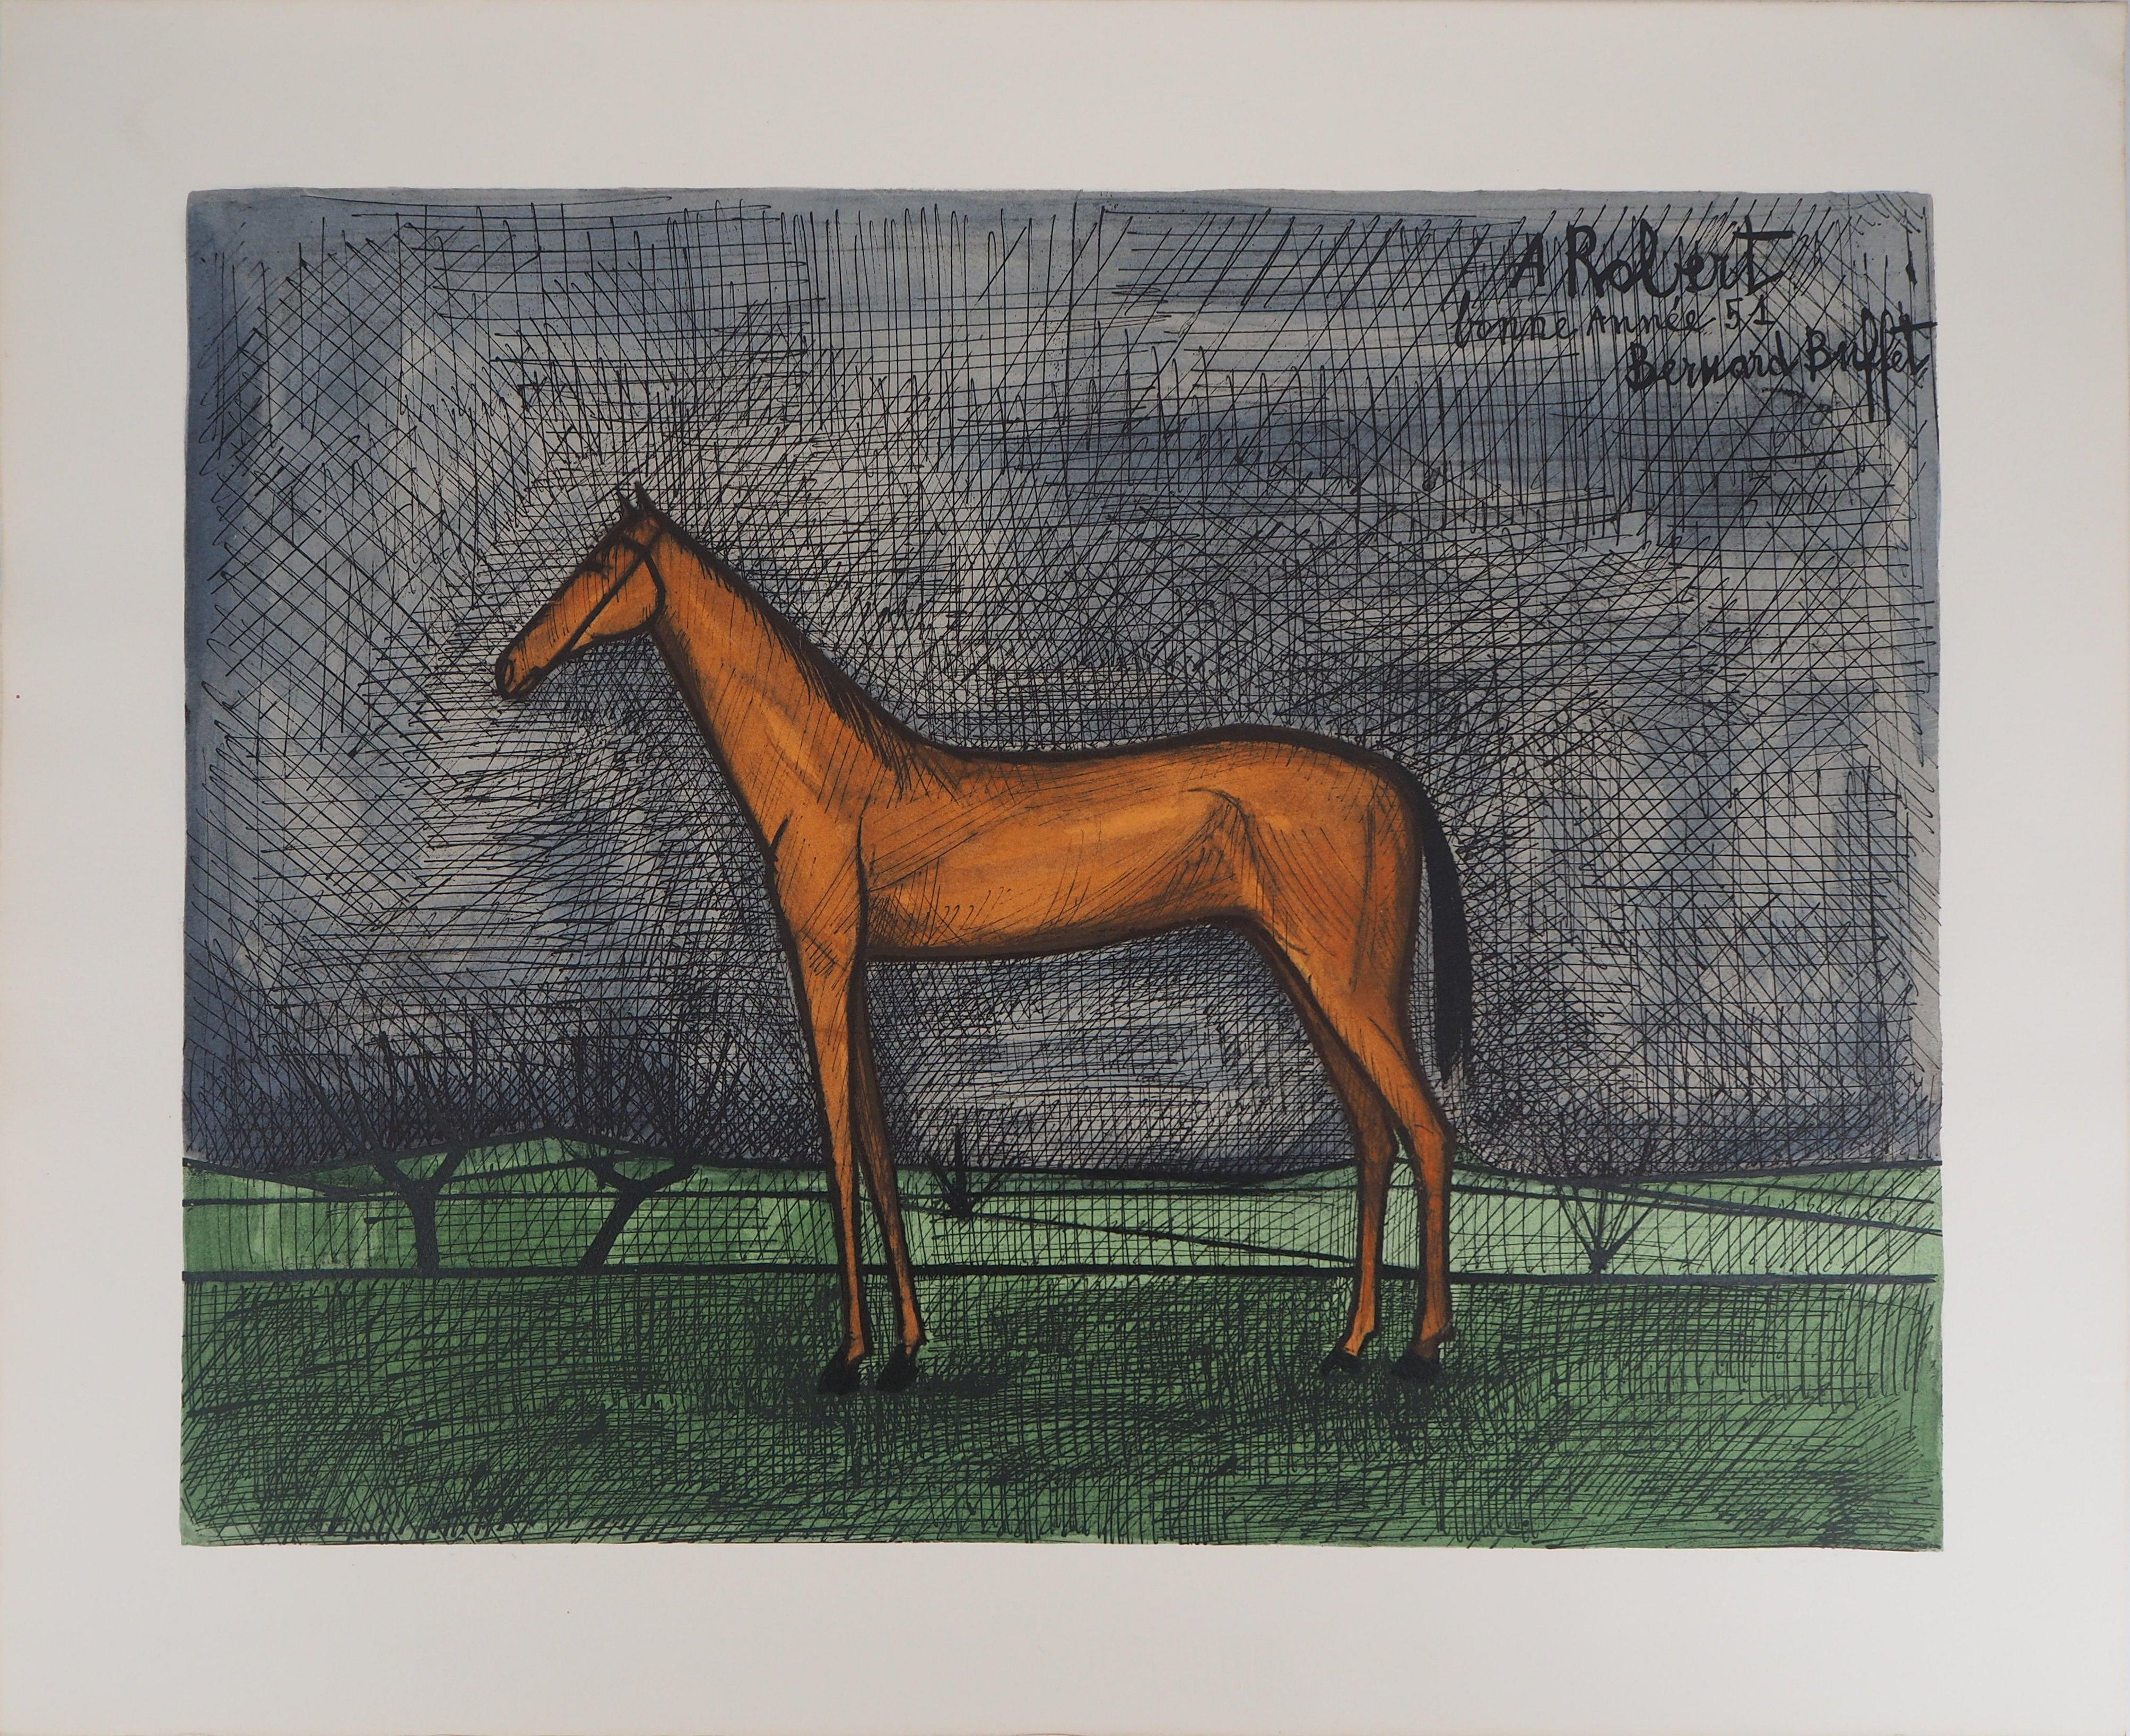 Bernard Buffet Animal Print - The Thoroughbred Horse - Lithograph